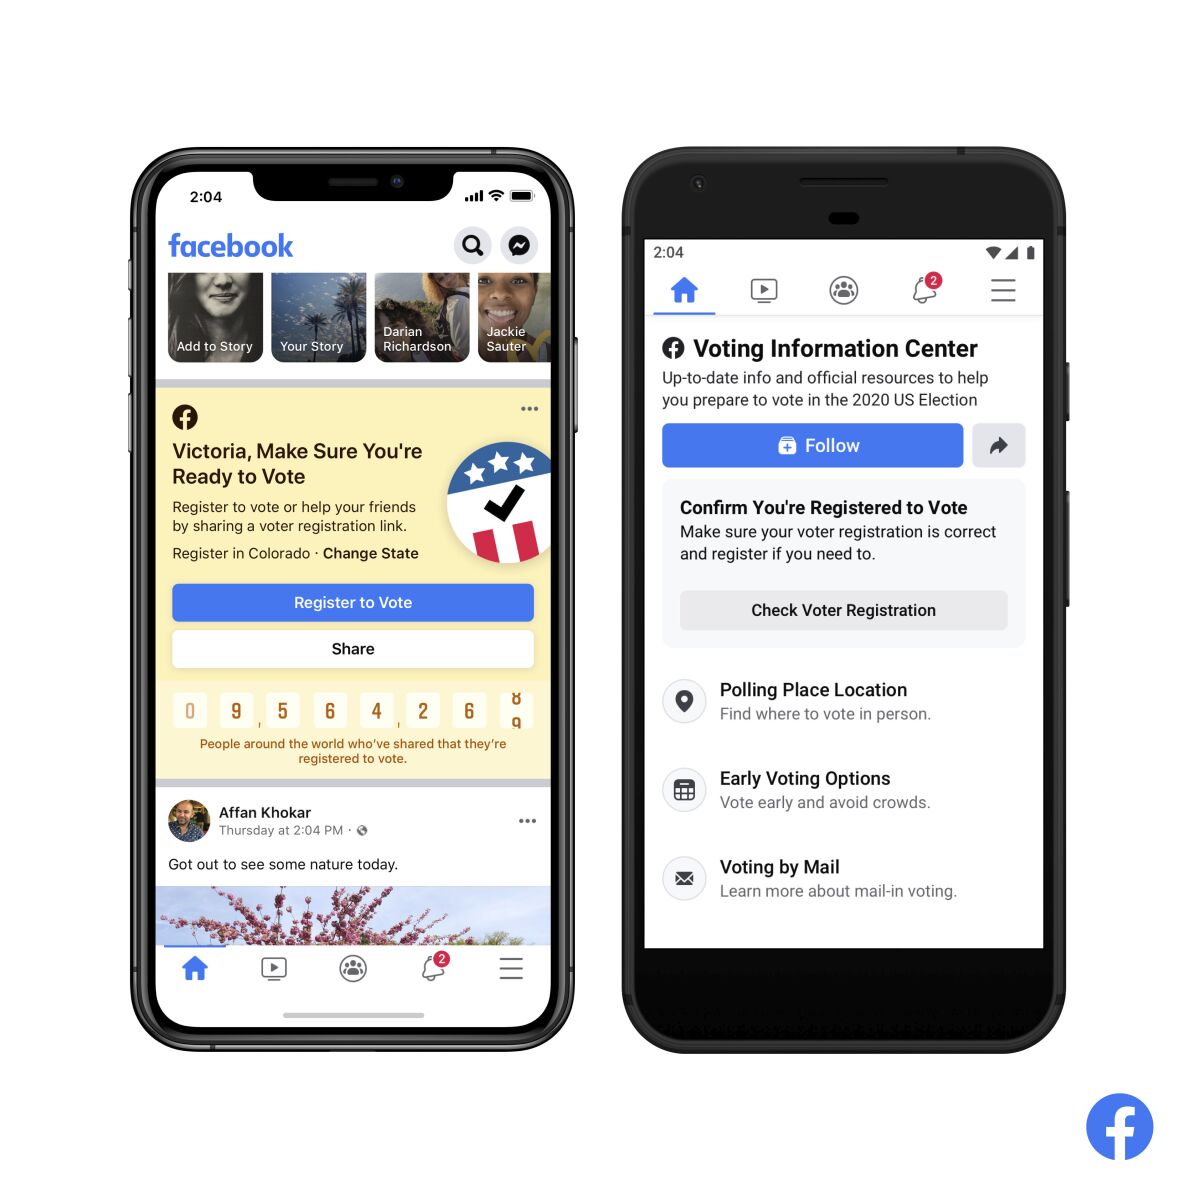 Facebook's new Voting Information Center